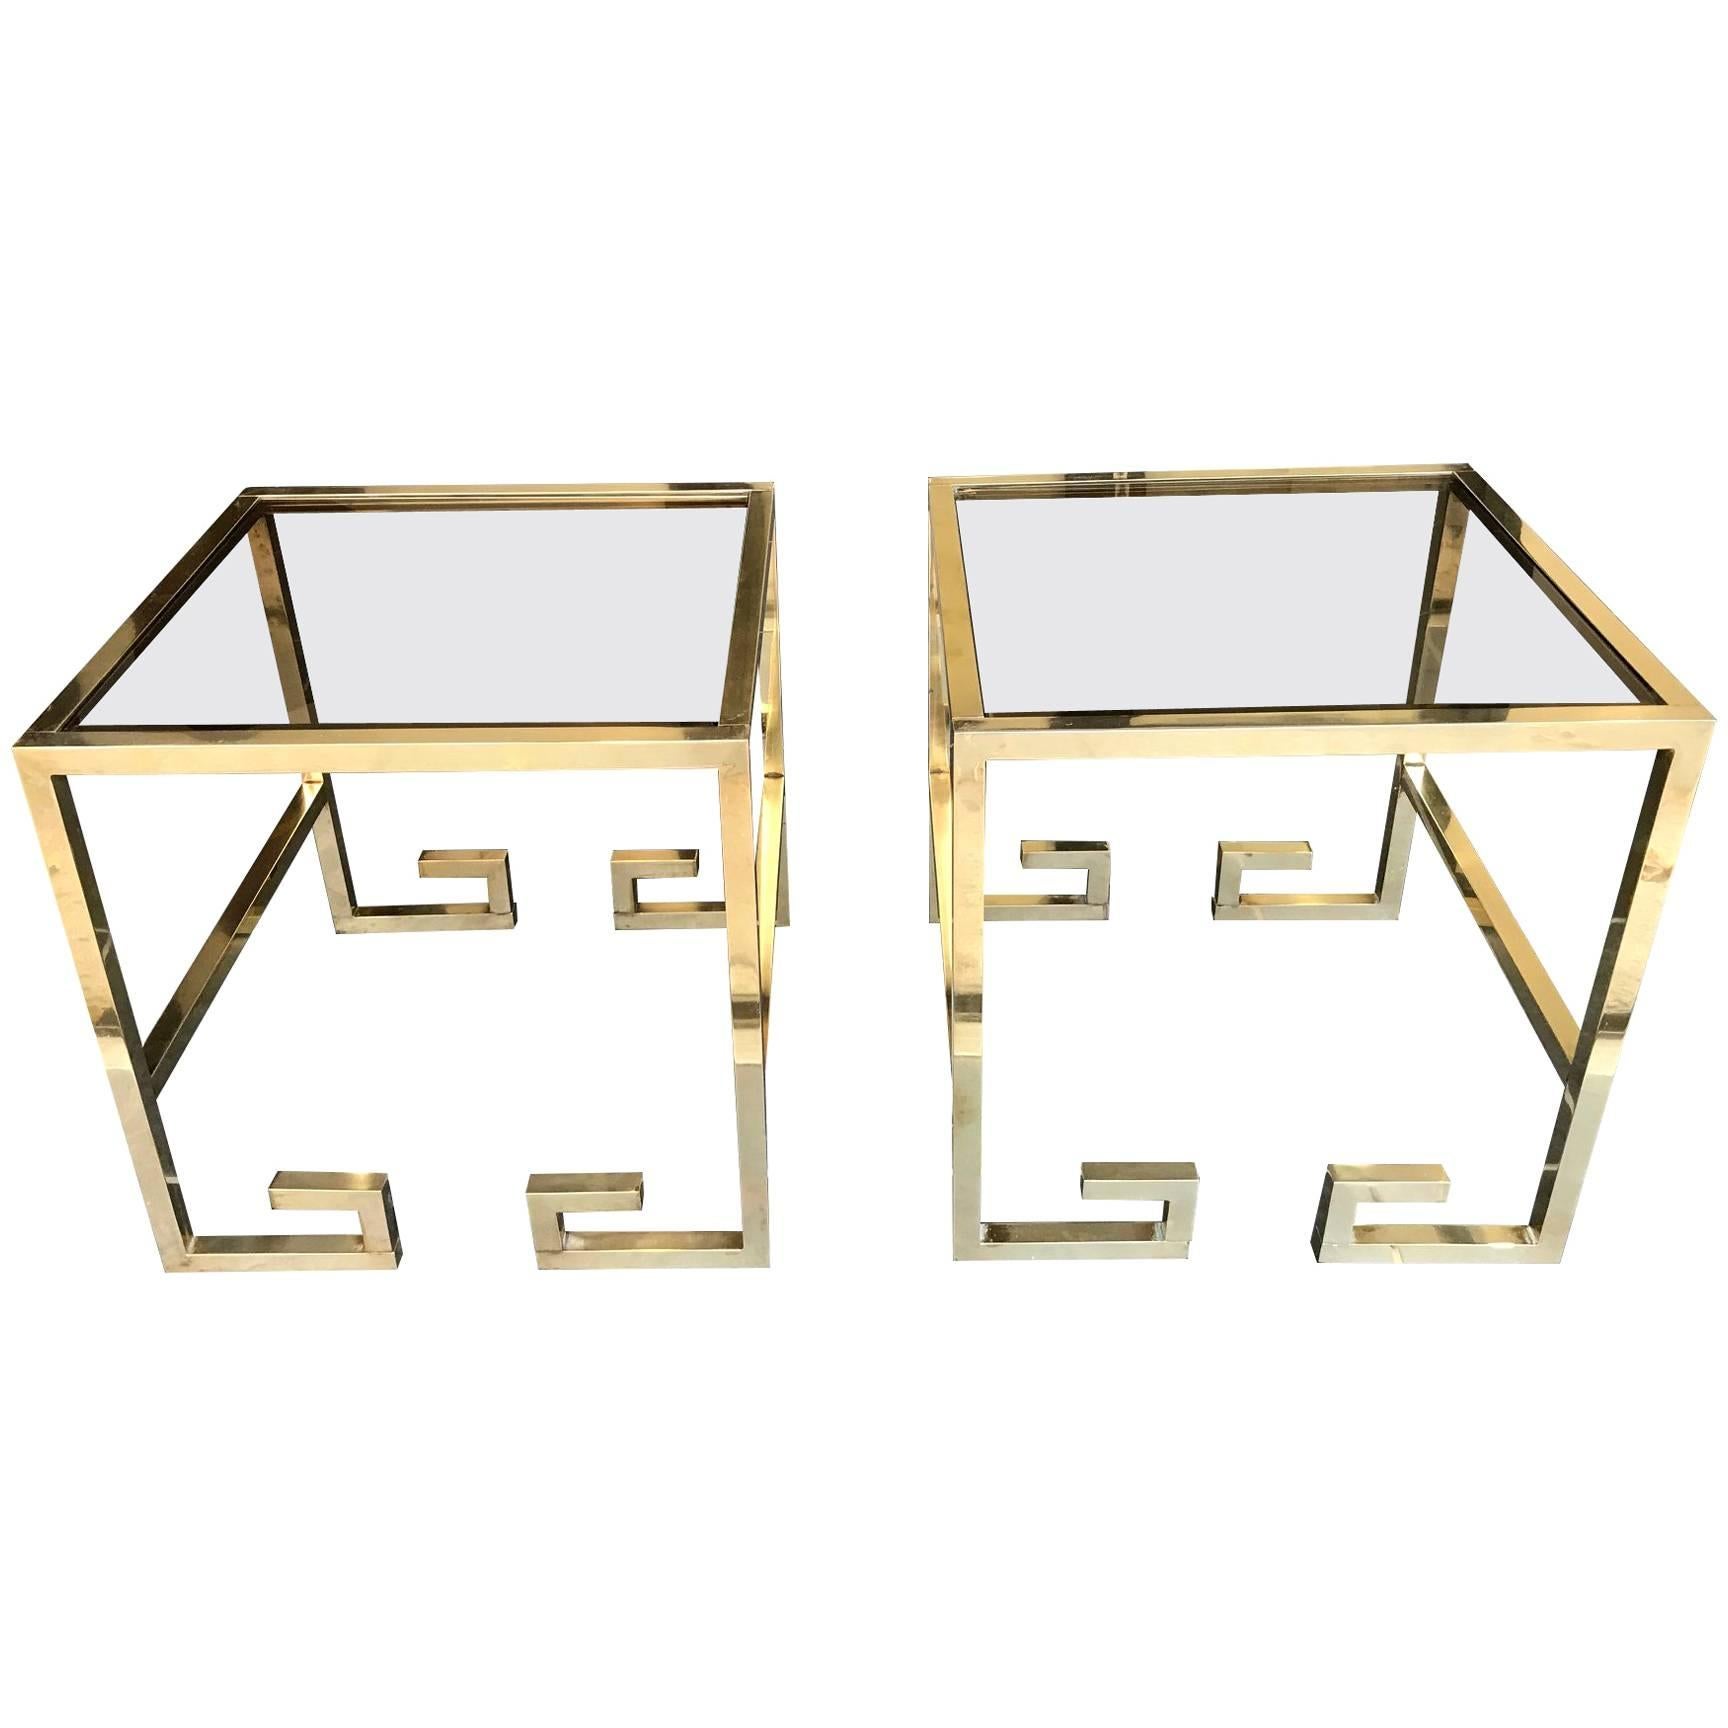 Pair of Brass Greek Key Design Side Tables